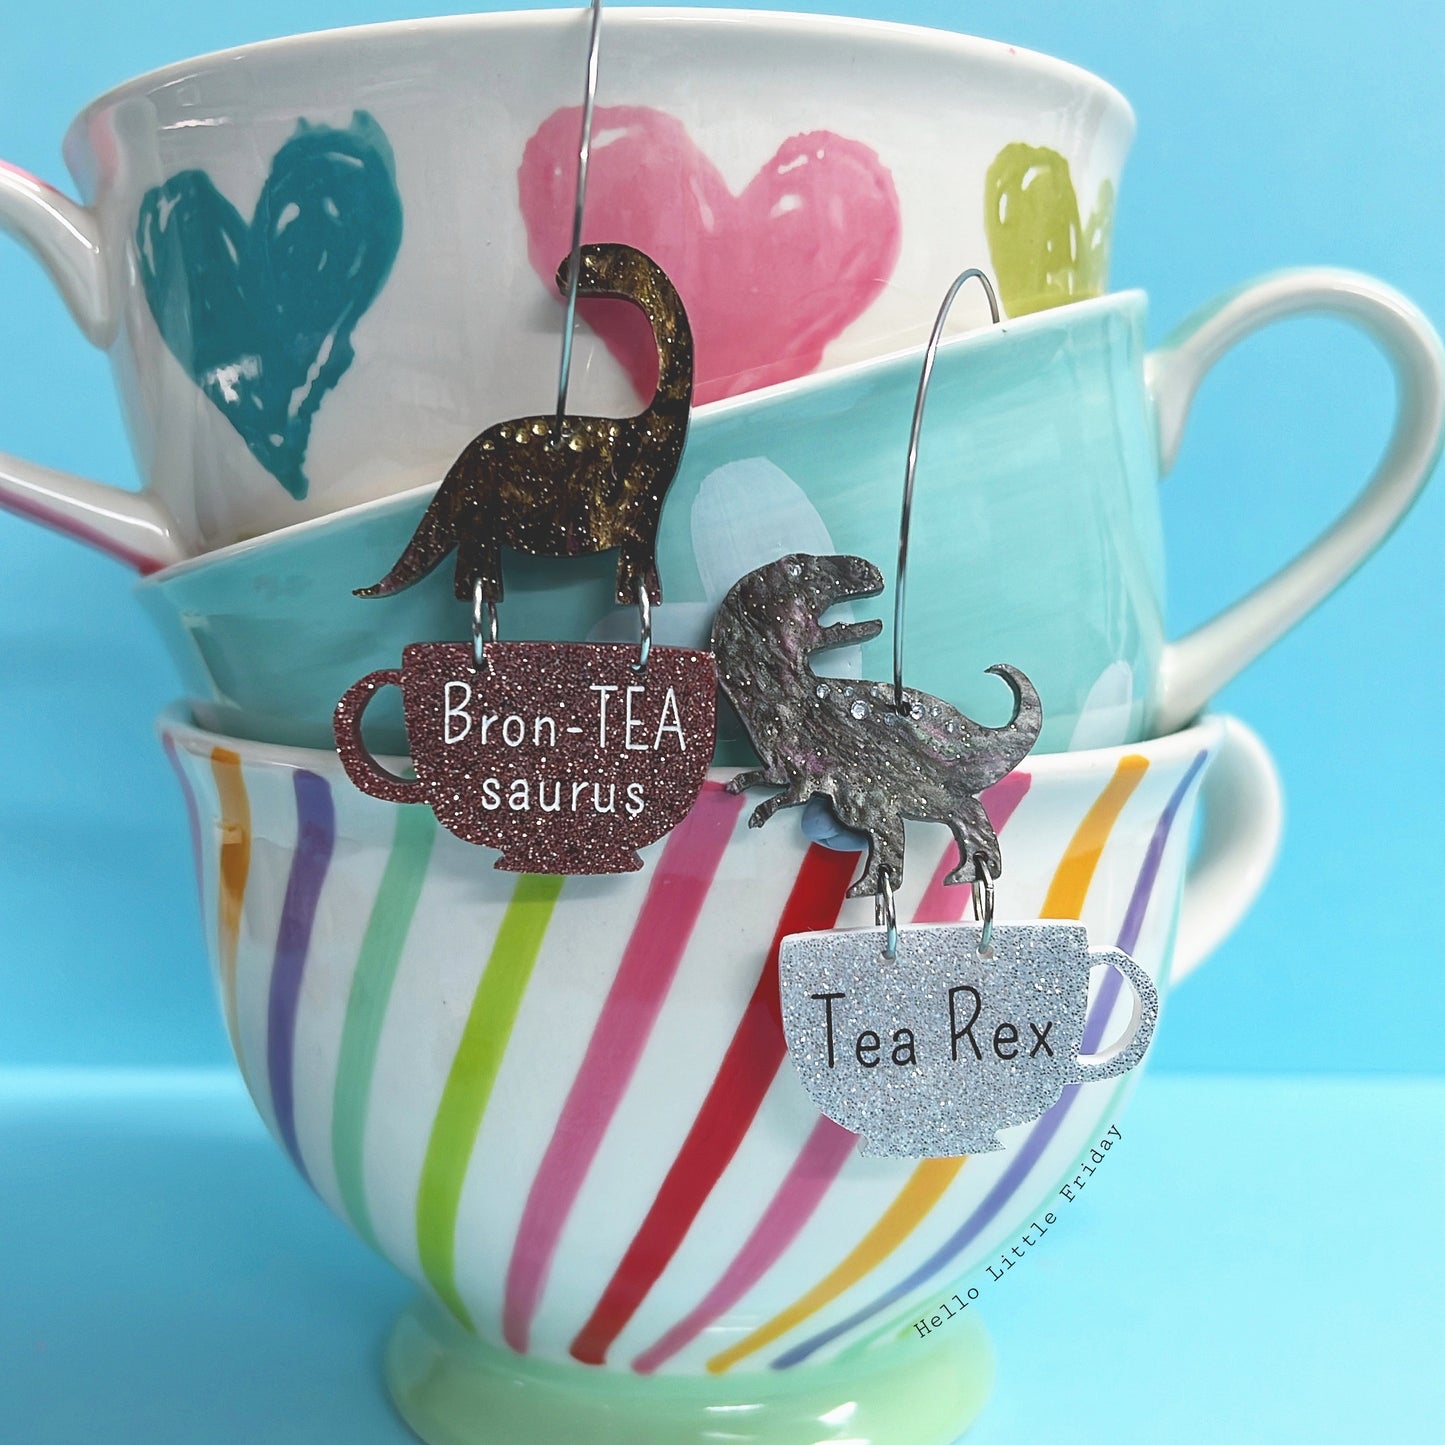 TEA Rex + Bron TEA saurus : TEA CUPS : Handmade Acrylic DROP Earrings